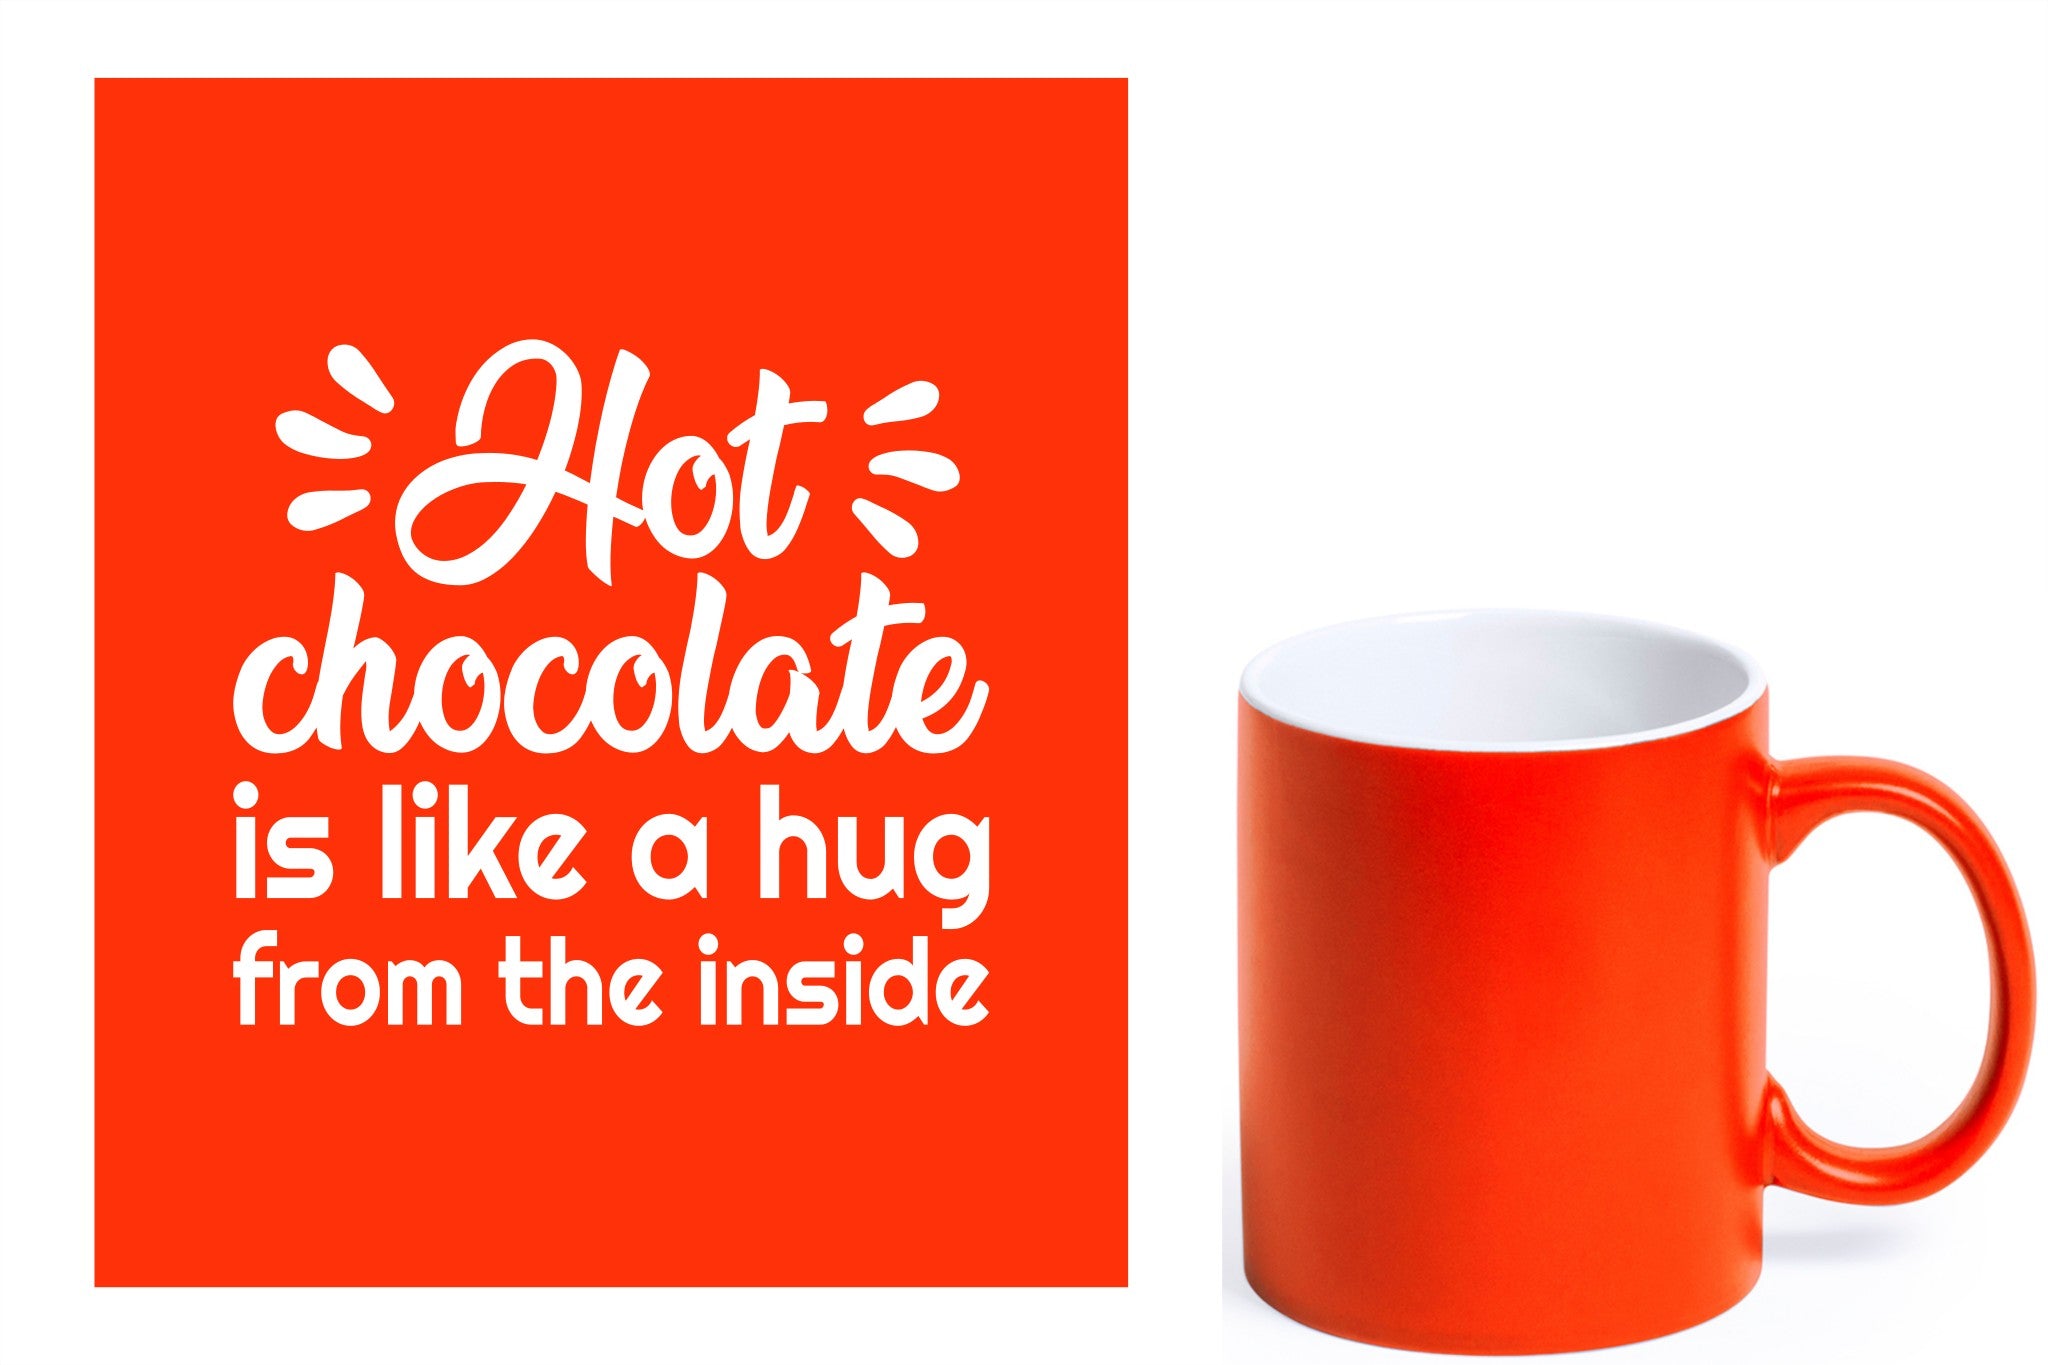 groene keramische mok met witte gravure  'Hot chocolate is like a hug from the inside'.